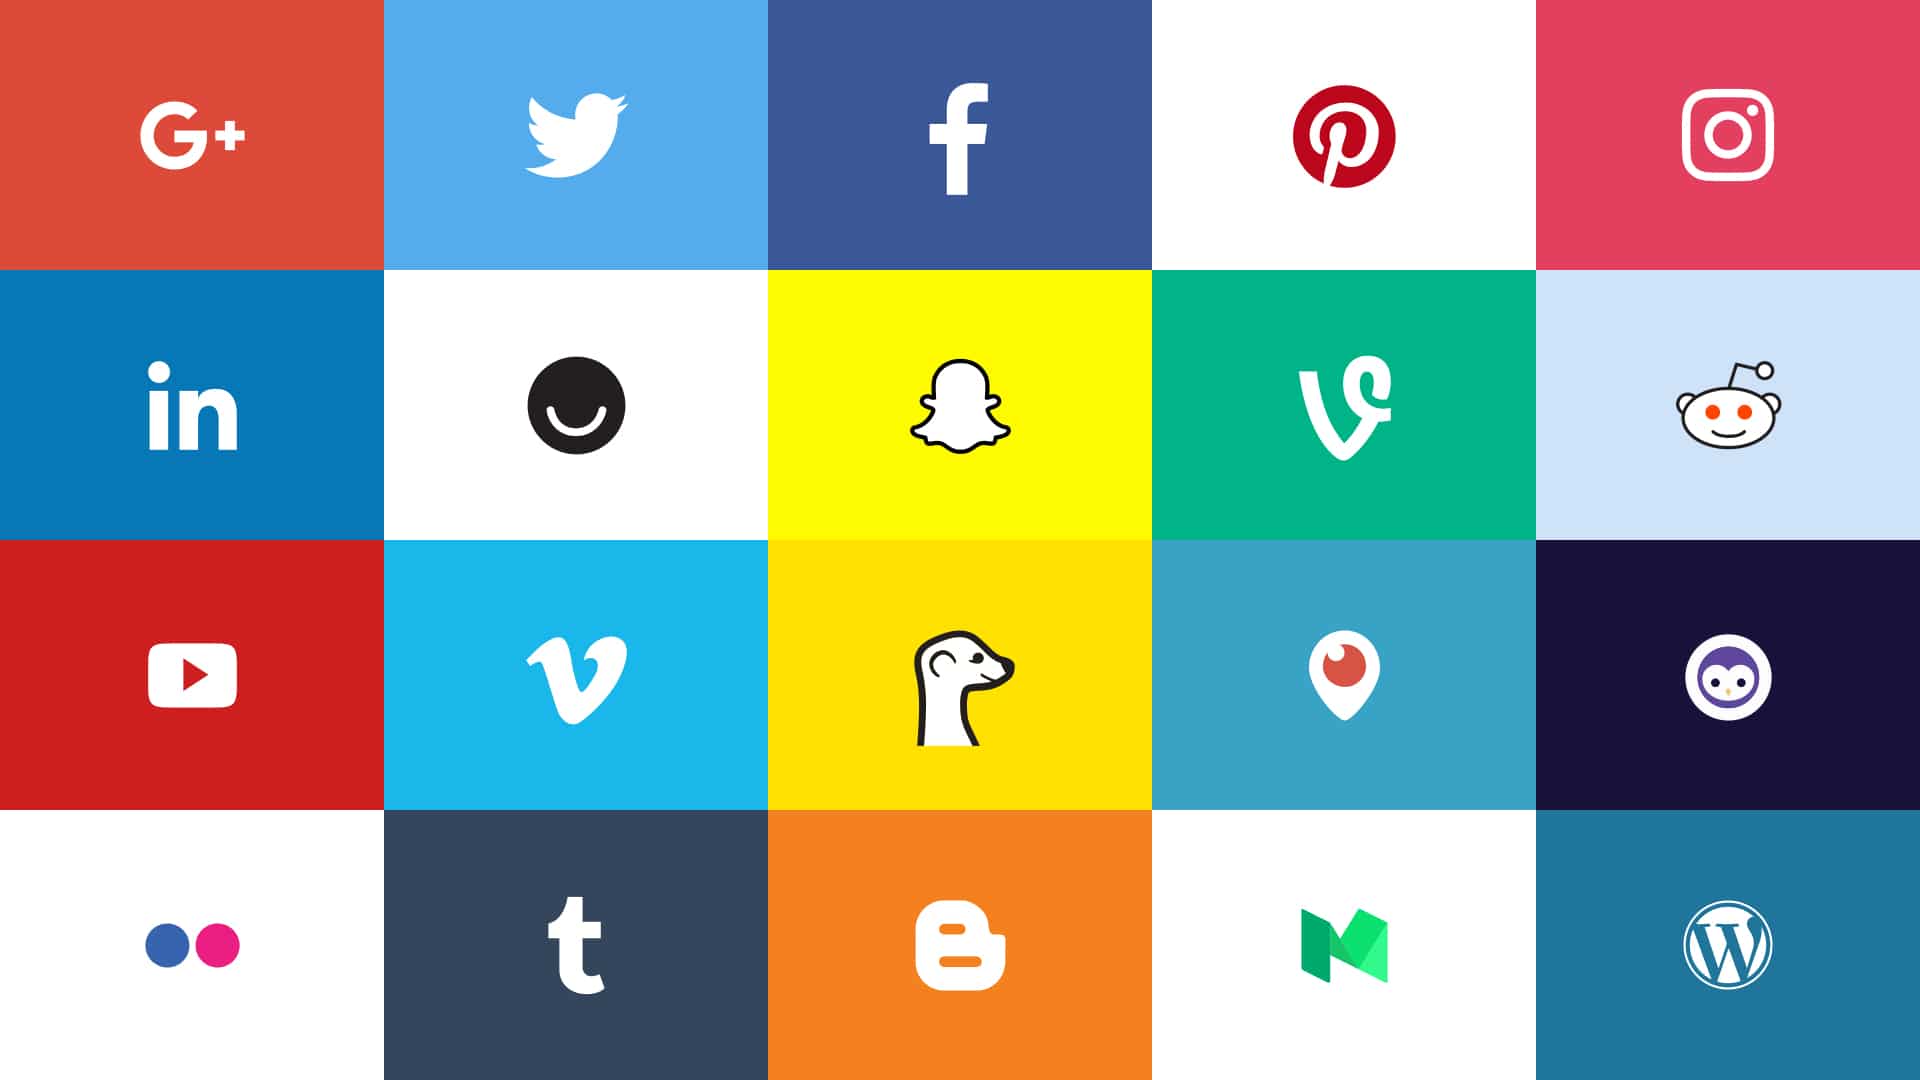 Instagram Official Logo - Social Media Logos 2017: Top 20 Networks Official Assets • Dustn.tv